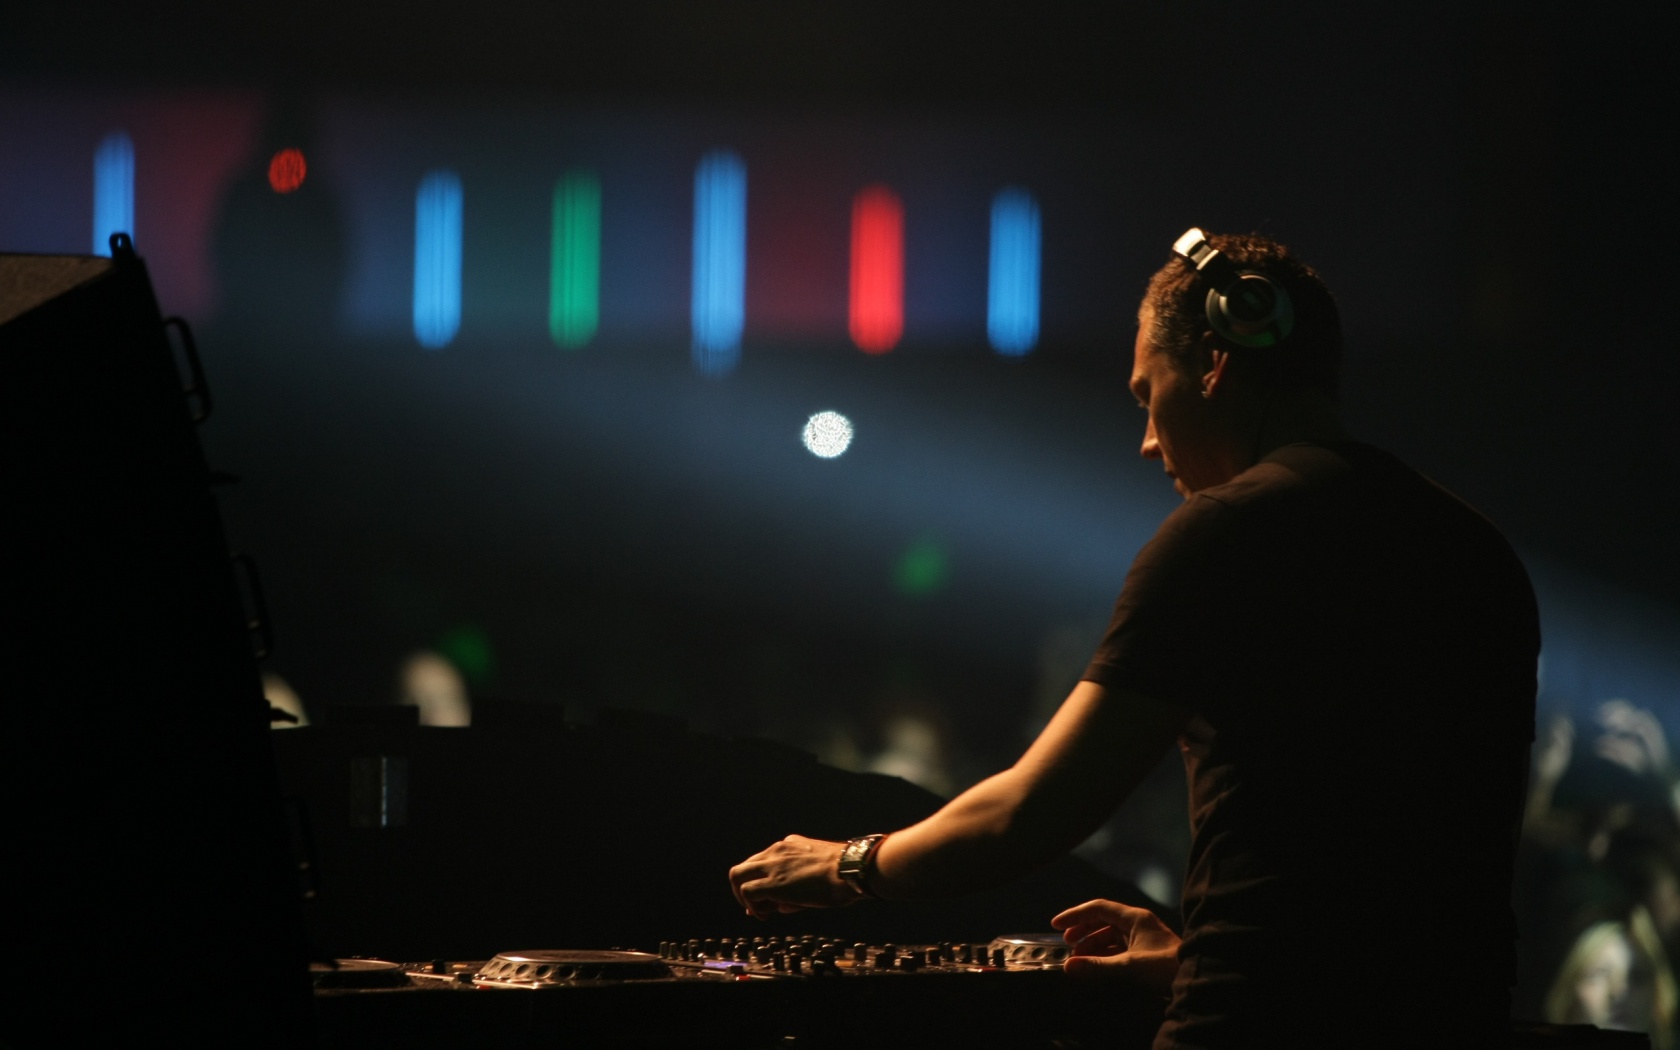 DJ Tiesto Live Wallpaper music background in 1680x1050 resolution